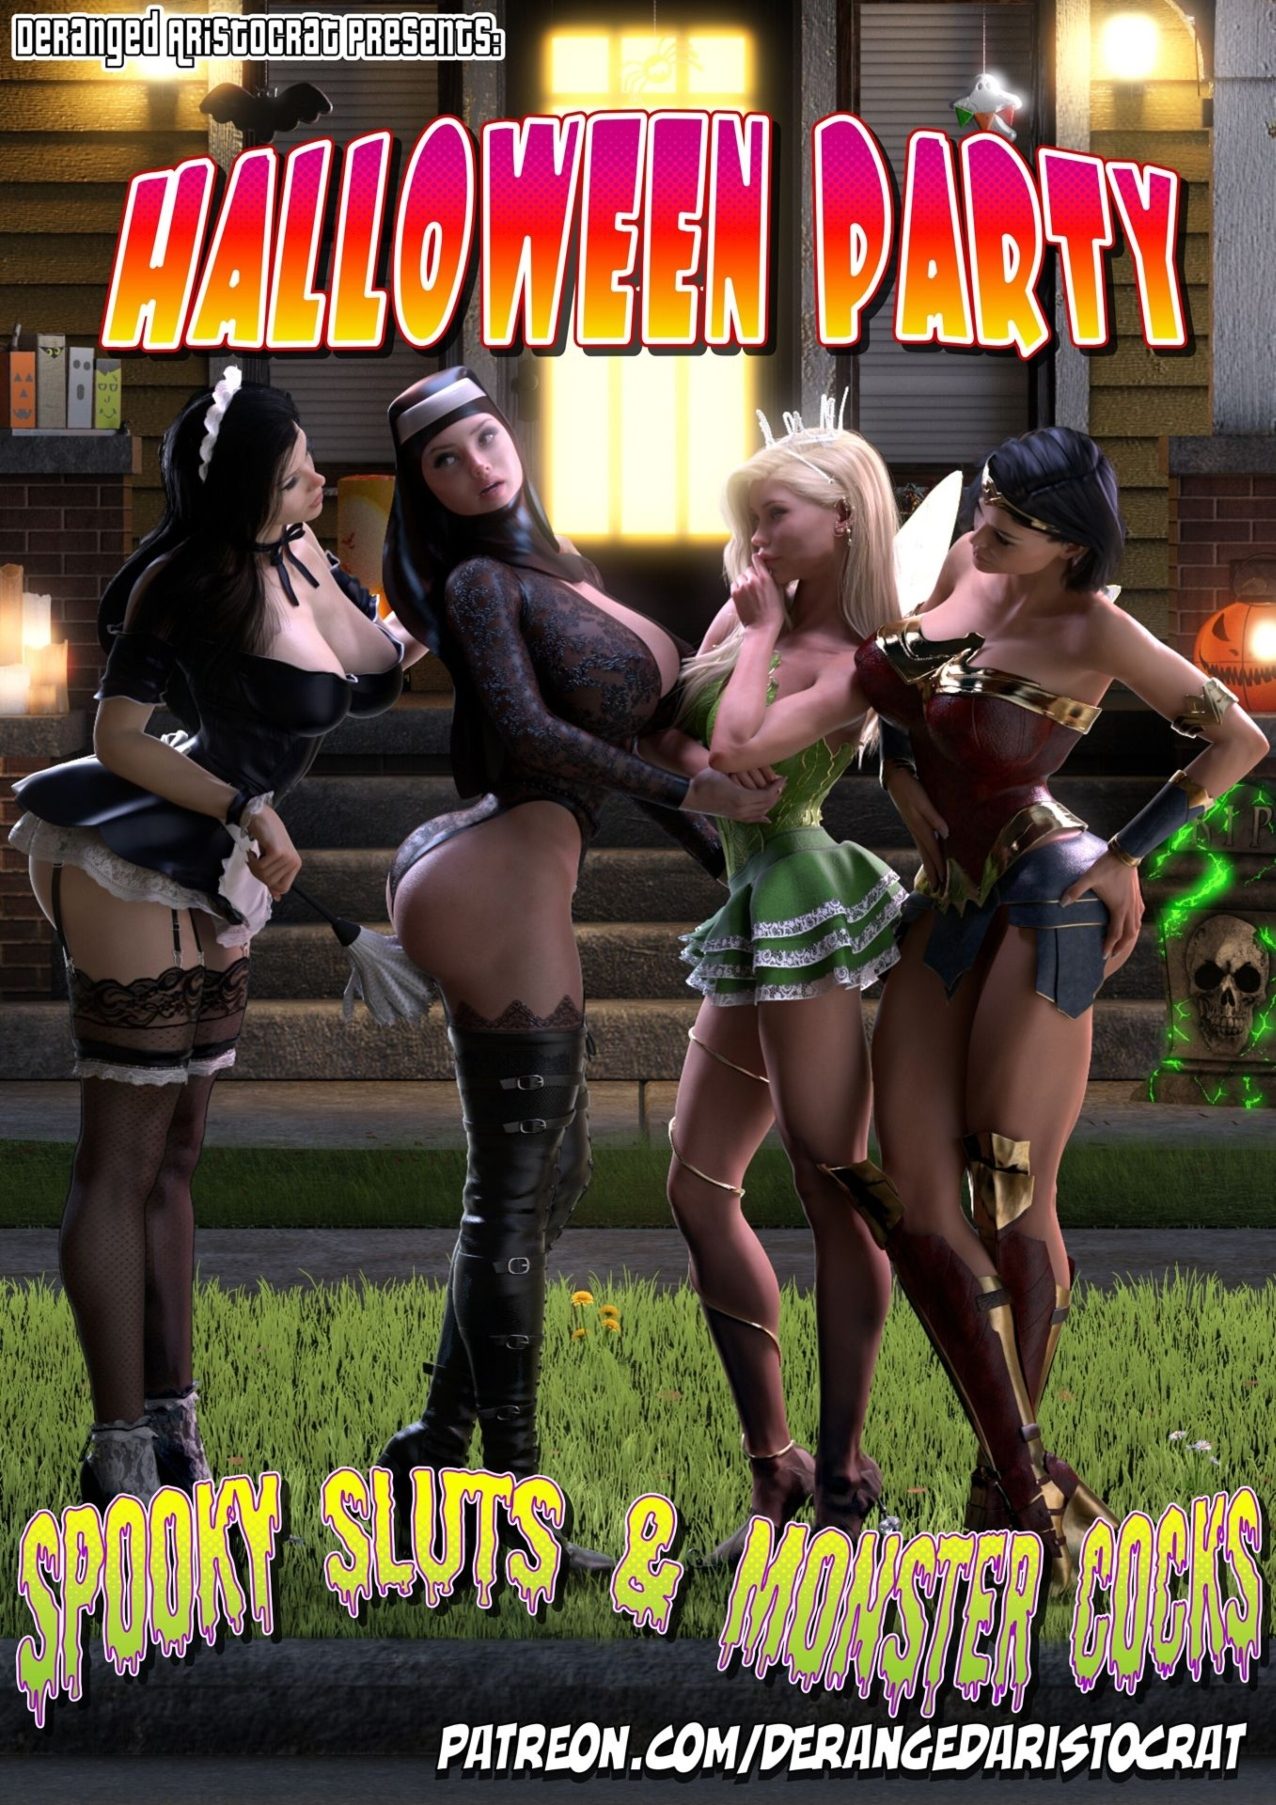 Halloween Party – Spooky Sluts & Monster Cocks by DerangedAristocrat